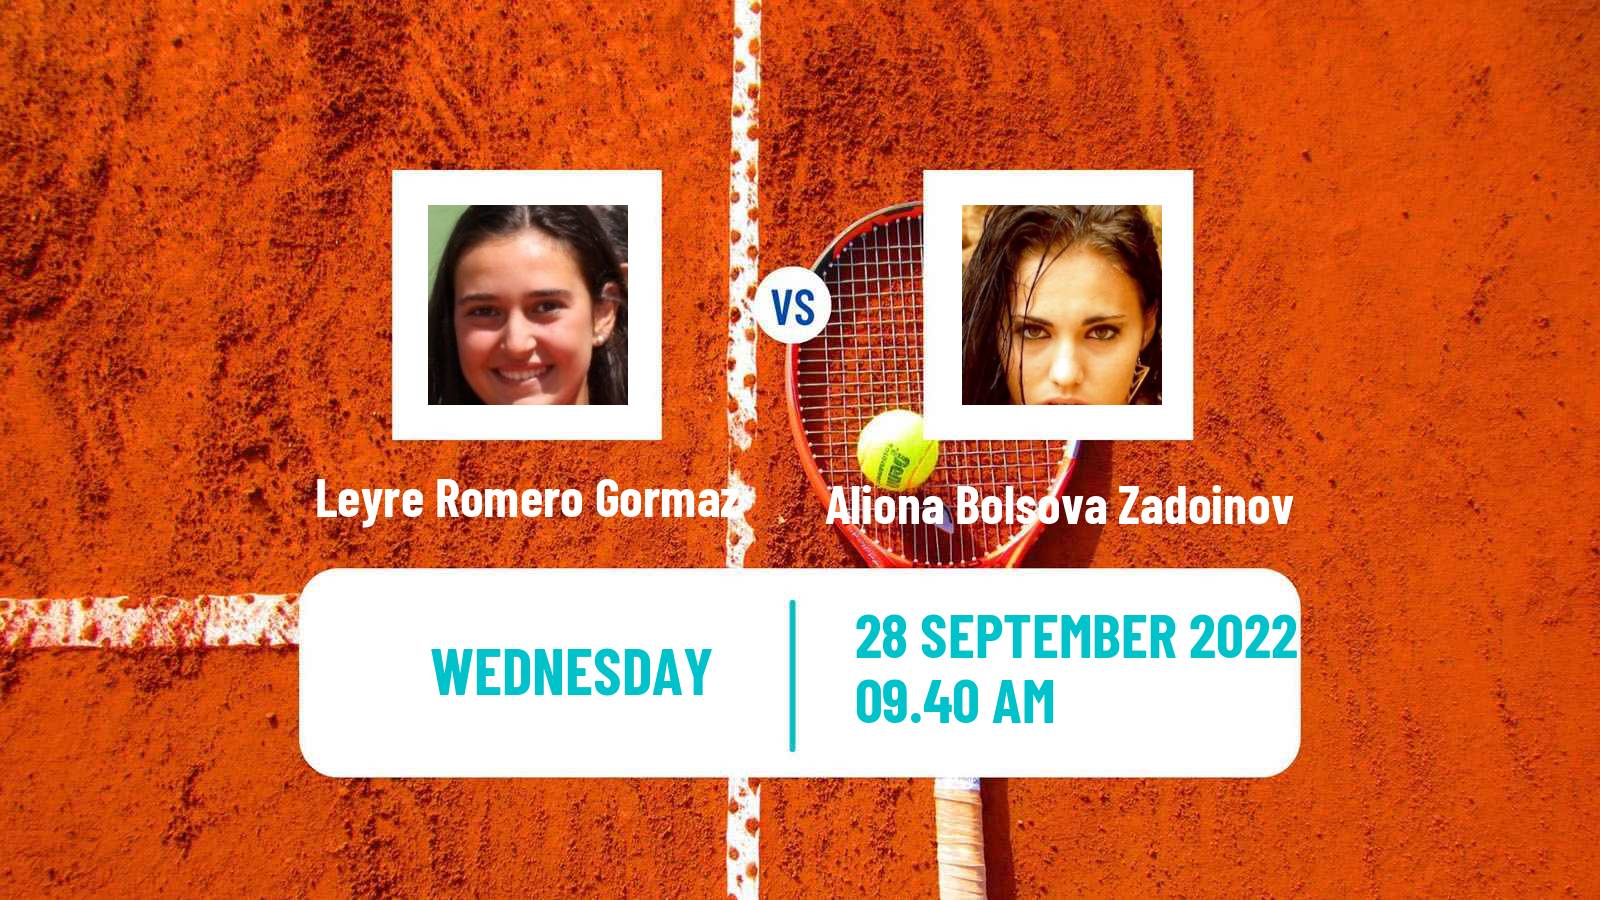 Tennis ITF Tournaments Leyre Romero Gormaz - Aliona Bolsova Zadoinov